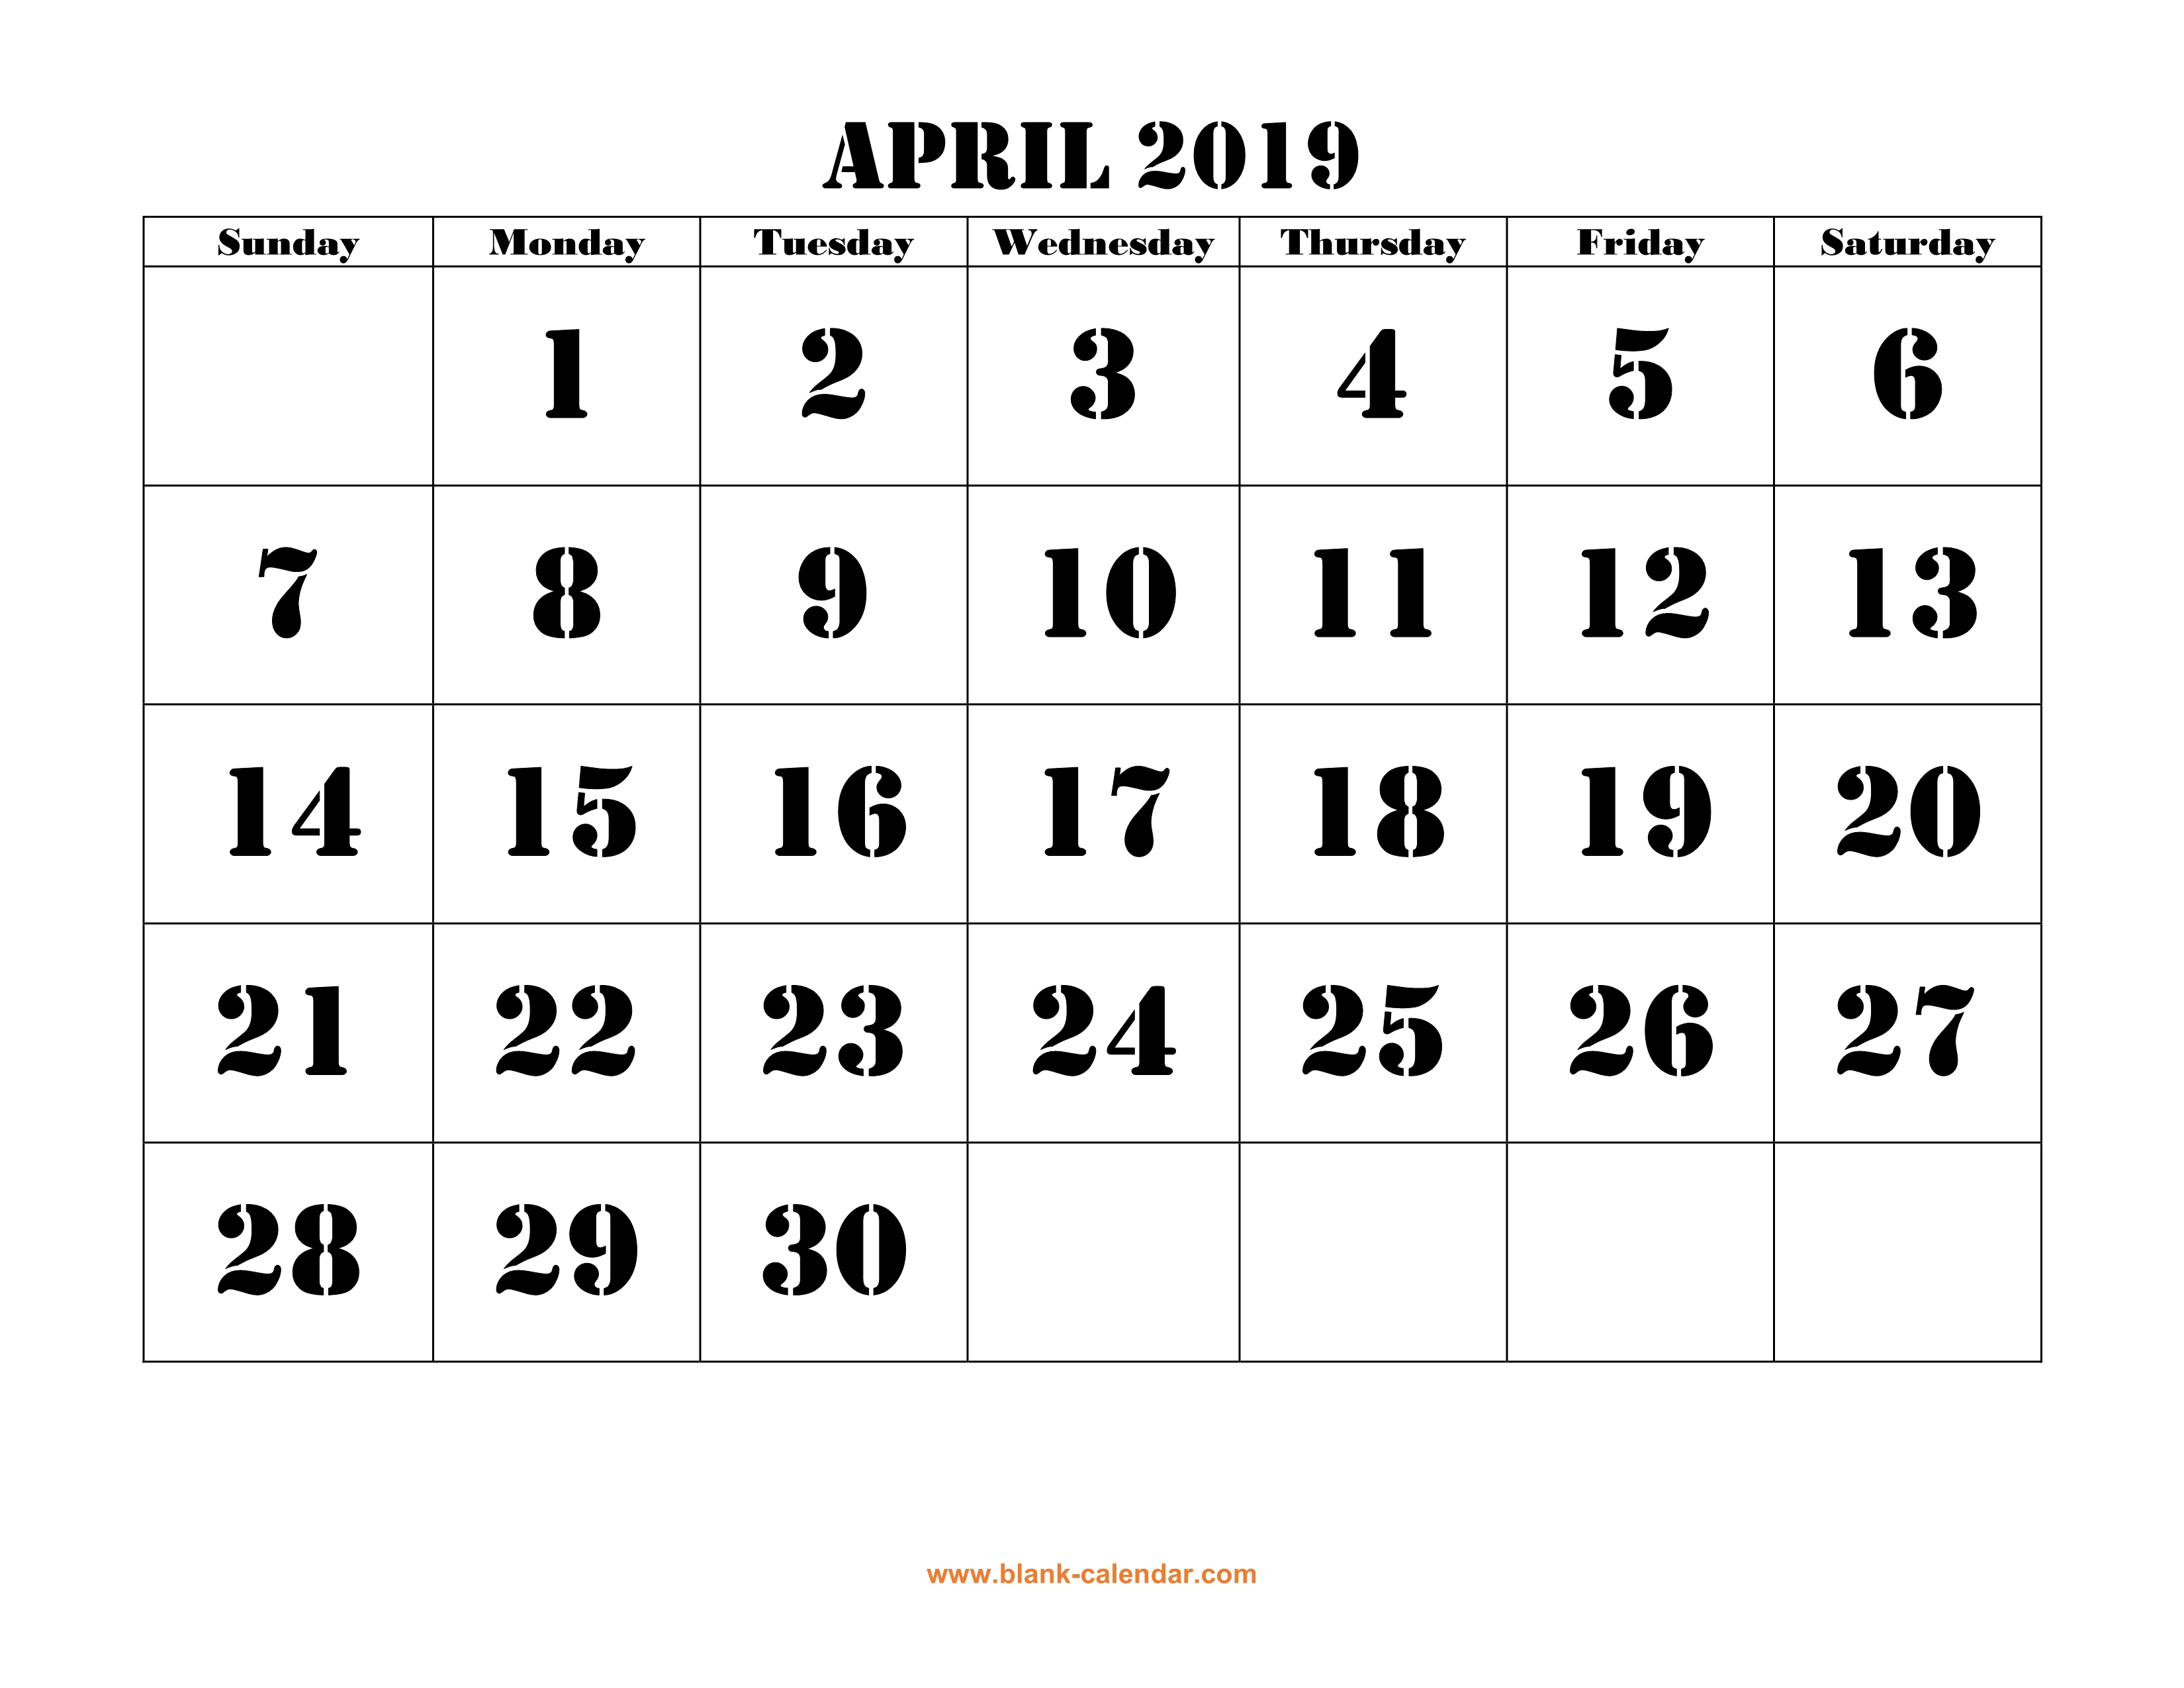 april-2019-calendar-free-download-freemium-templates